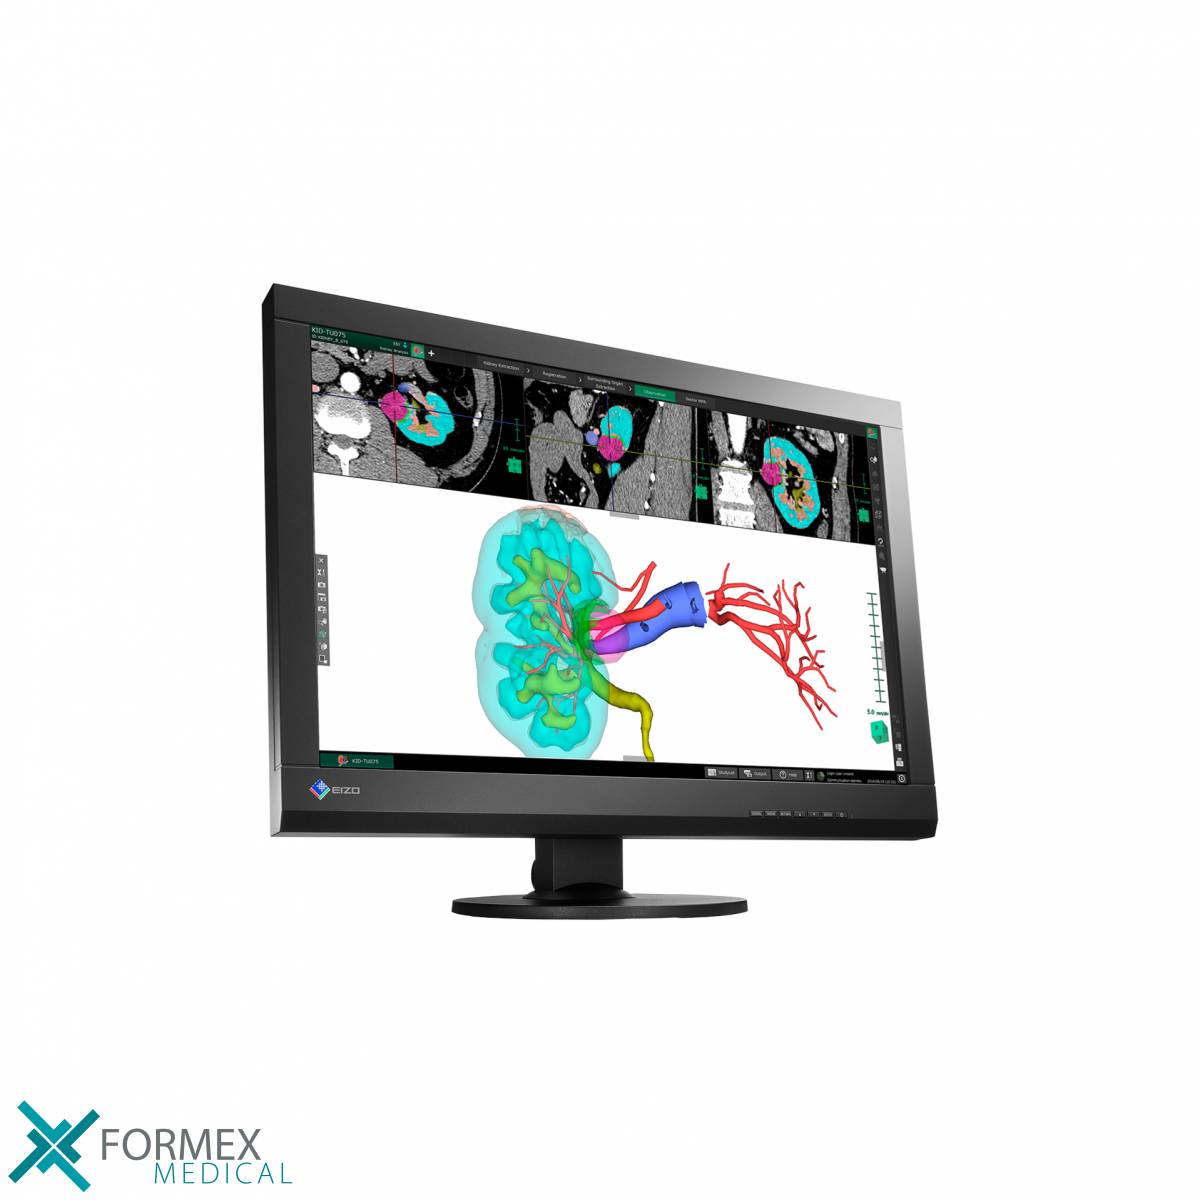 Eizo RadiForce MX242W, medical displays, medische schermen, eizo medical monitor, medische monitoren, eizo medical, medische beeldschermen, diagnostische monitoren, diagnostiek monitoren, eizo monitor